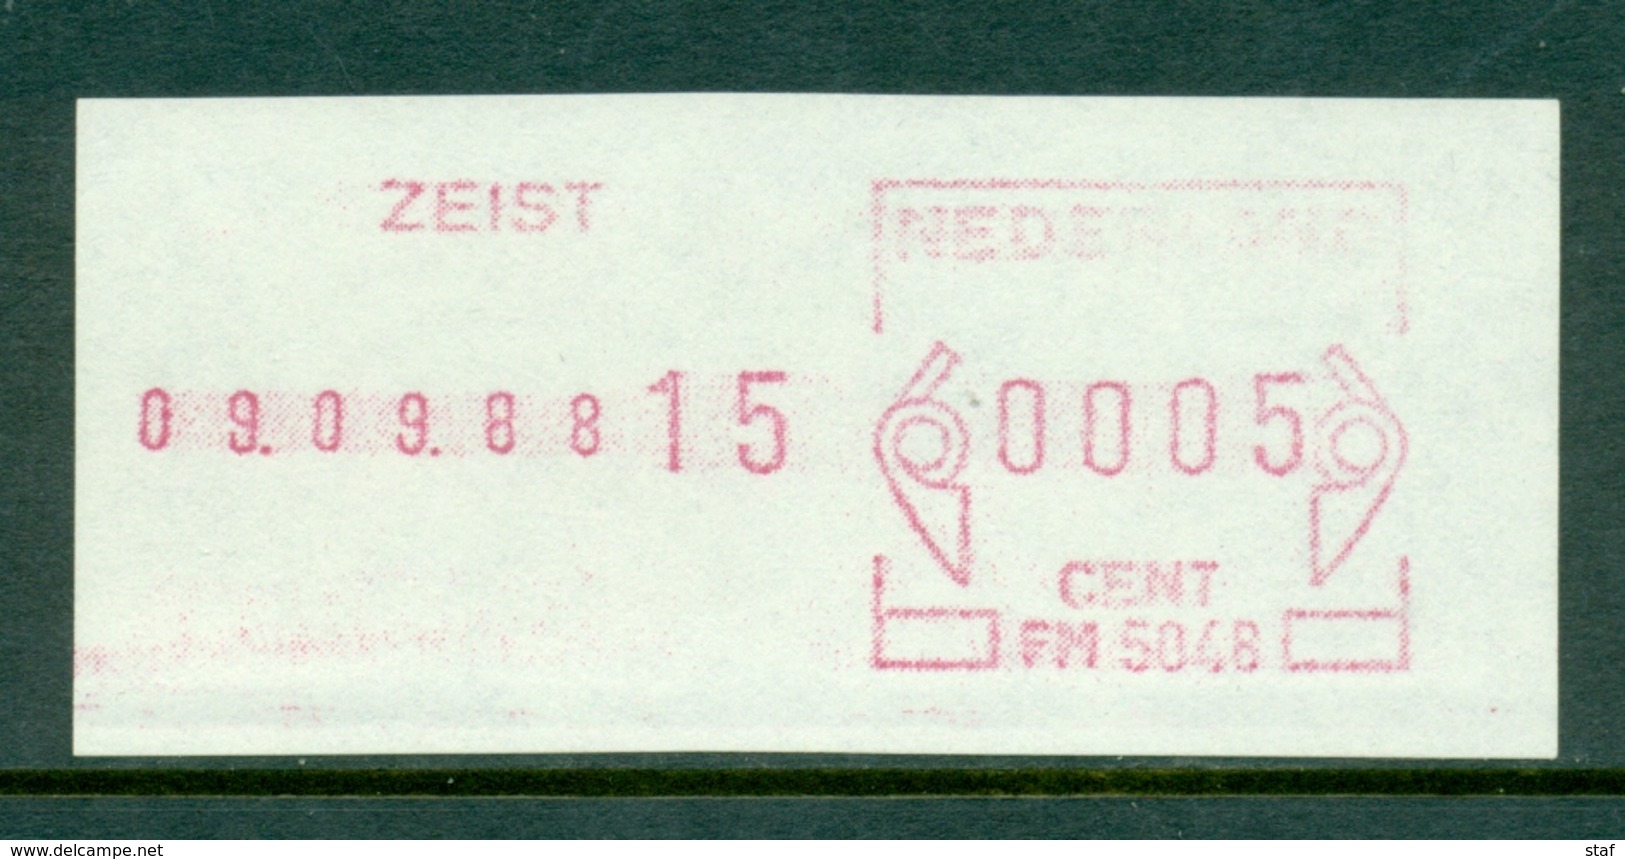 Loketstrook Zeist 1988 Postfris - Máquinas Franqueo (EMA)